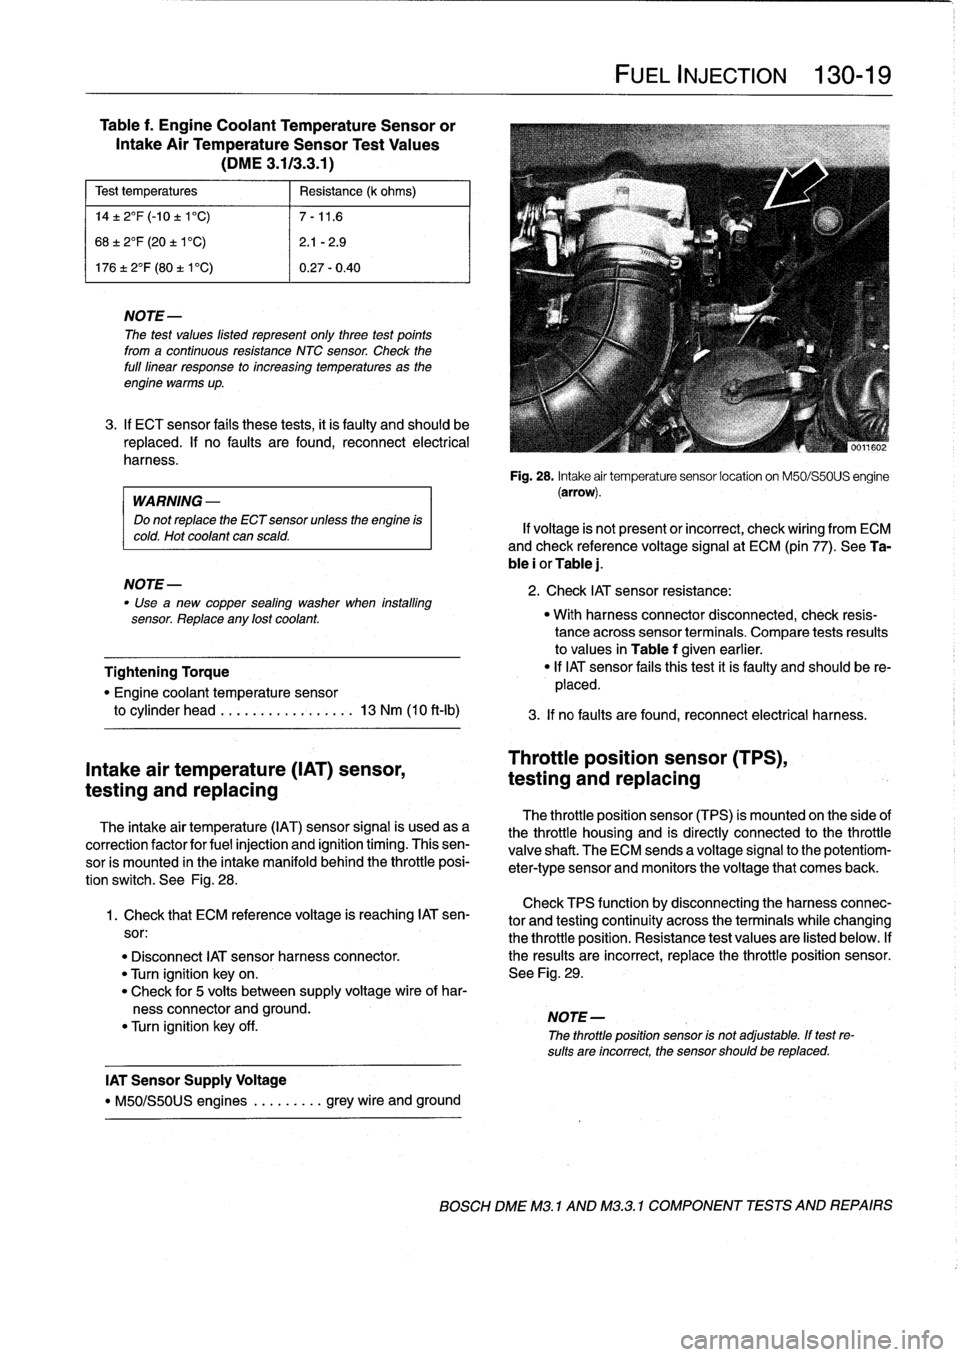 BMW 318i 1997 E36 Workshop Manual 
Table
f
.
Engine
Coolant
TemperatureSensor
or

Intake
Air
TemperatureSensor
Test
Values

(DME
3
.113
.3
.1)

Test
temperatures

	

Resistance
(k
ohms)

14±
2°F
(-10
±
1C)

	

7-11
.6

68±
2°F
(